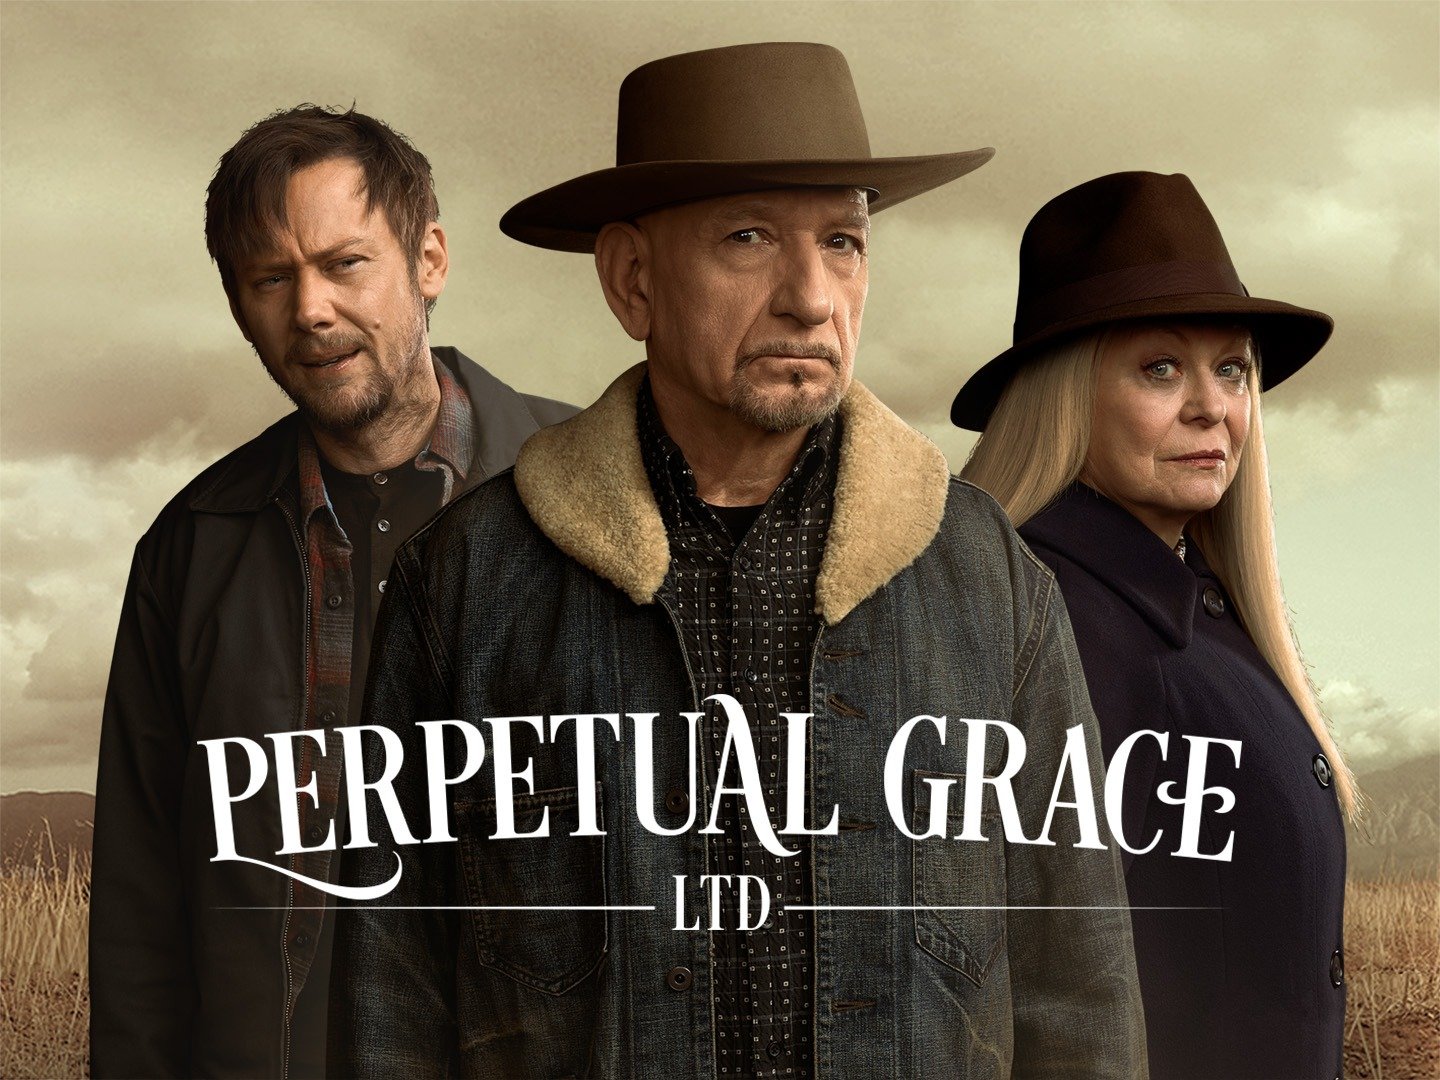 "Perpetual Grace LTD: Season 1 photo 2"